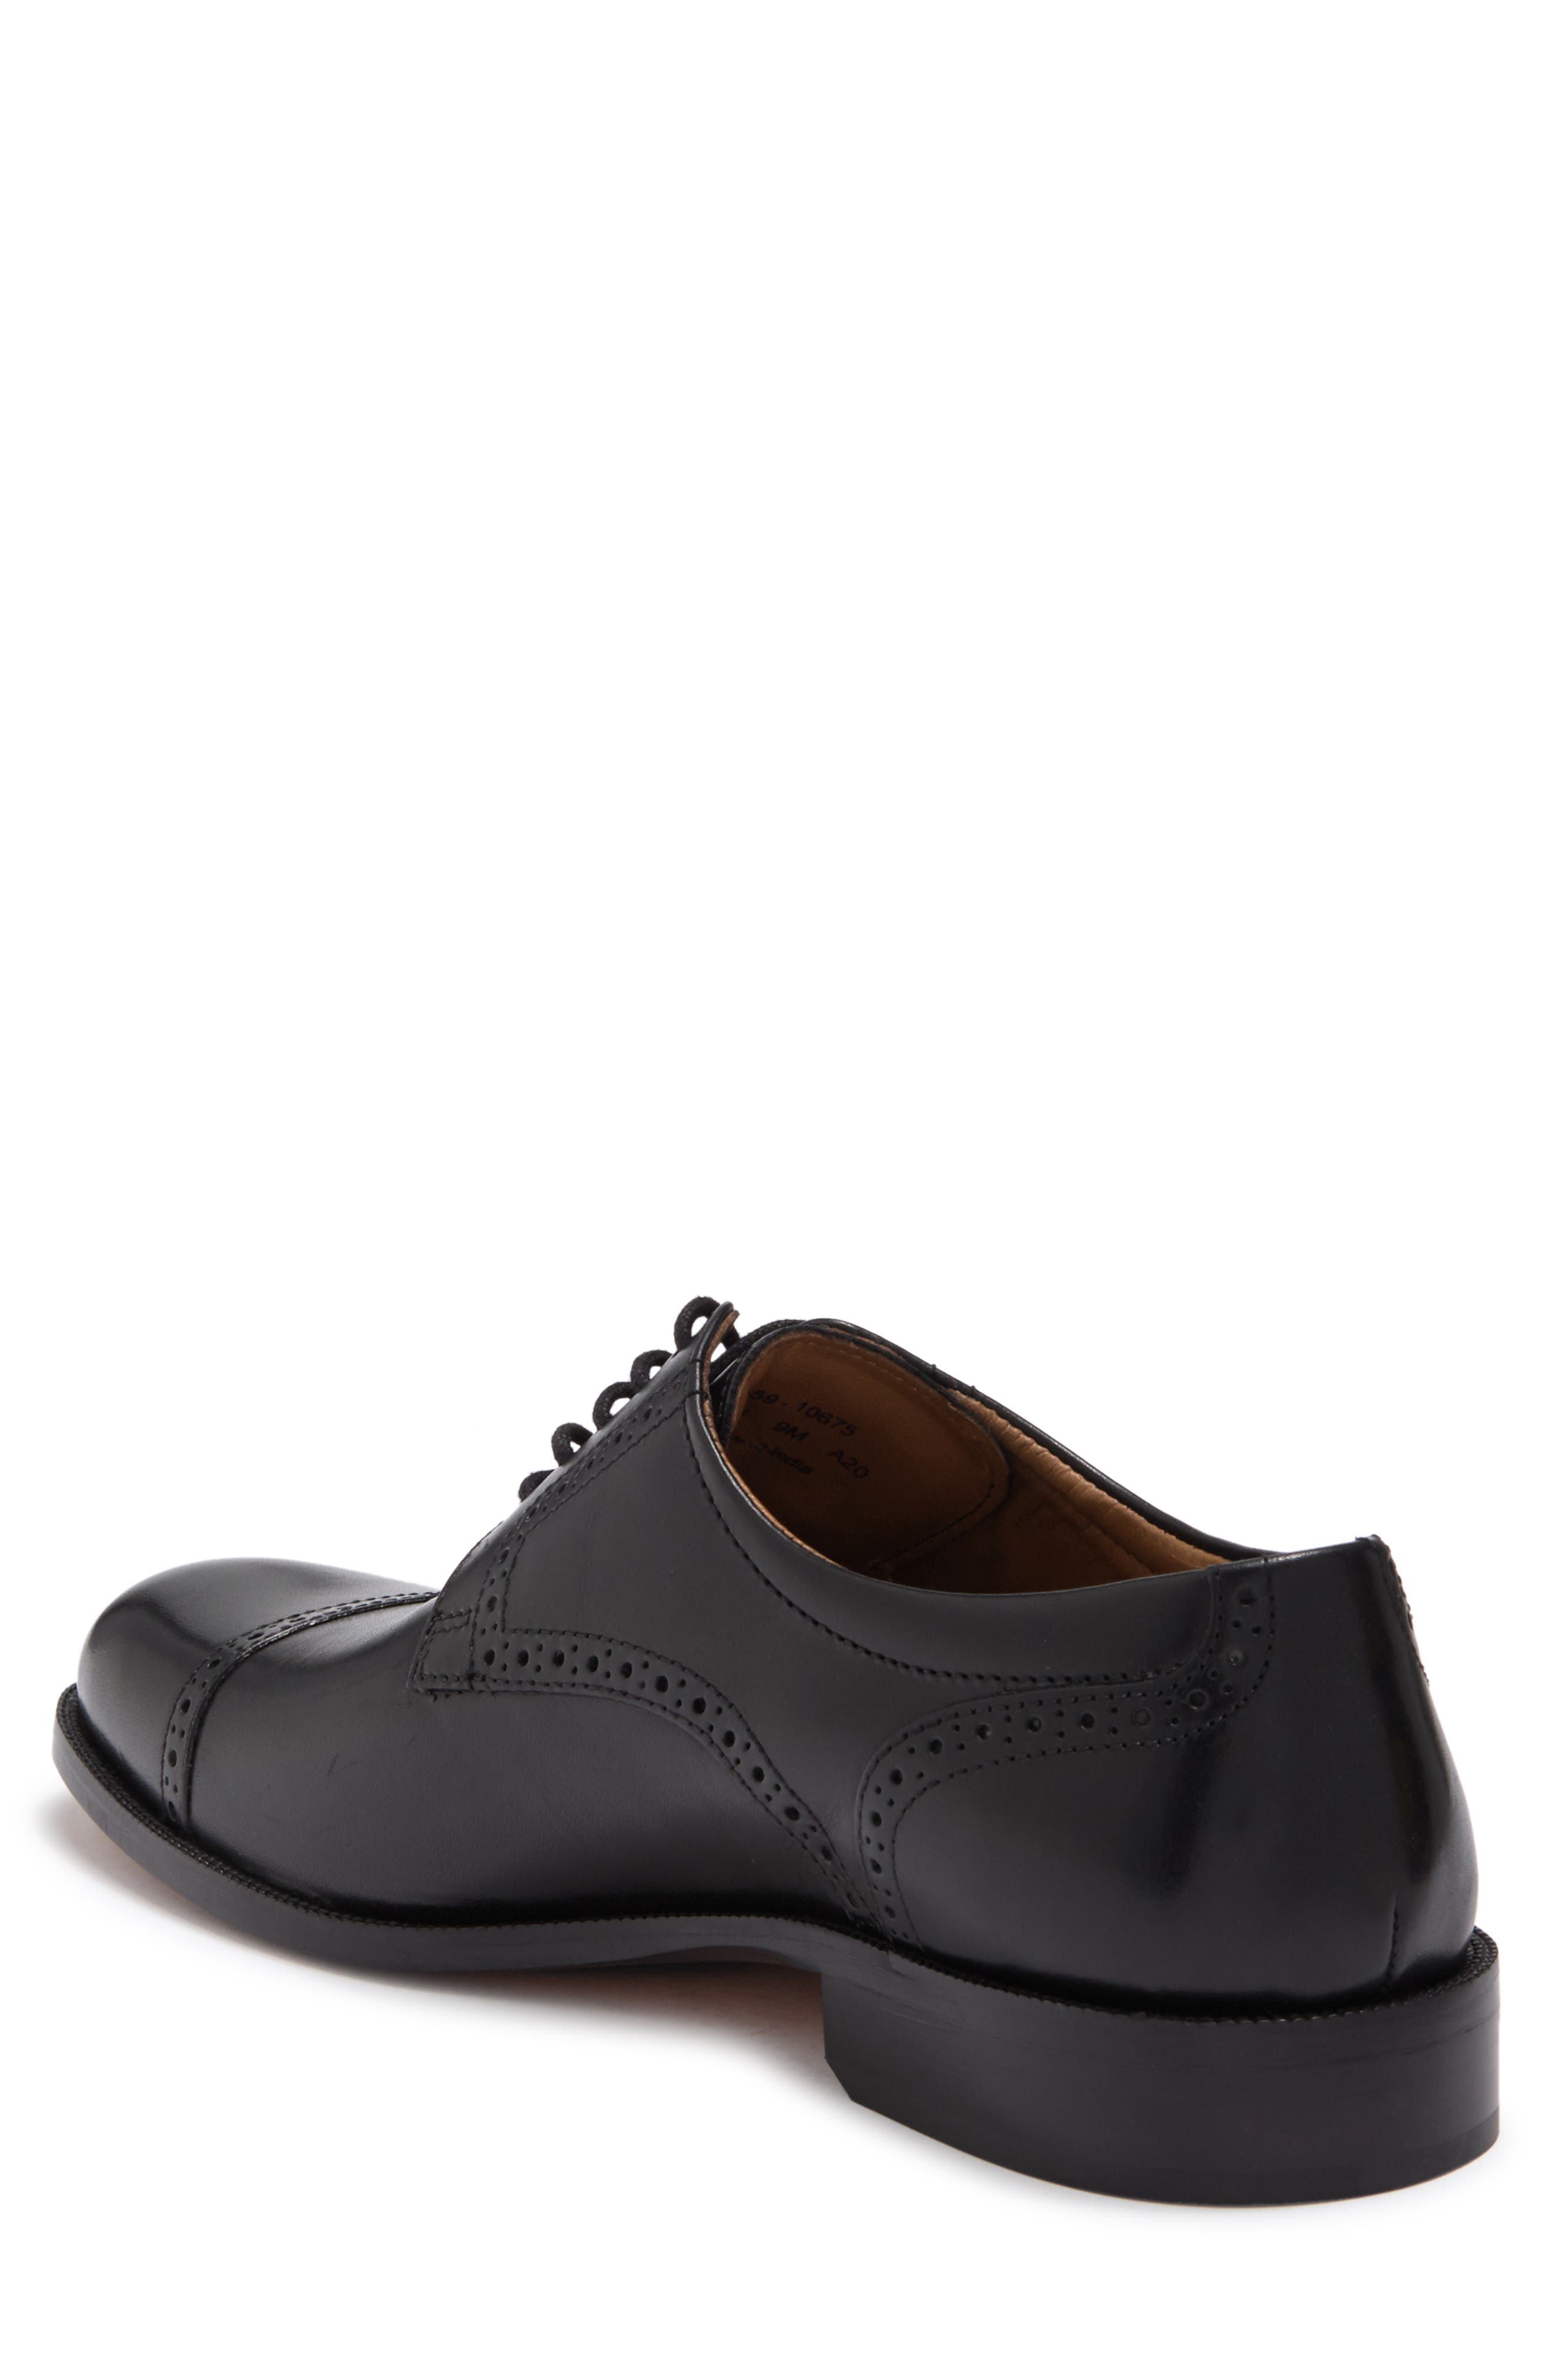 Johnston & Murphy Harmon Shoe In Black